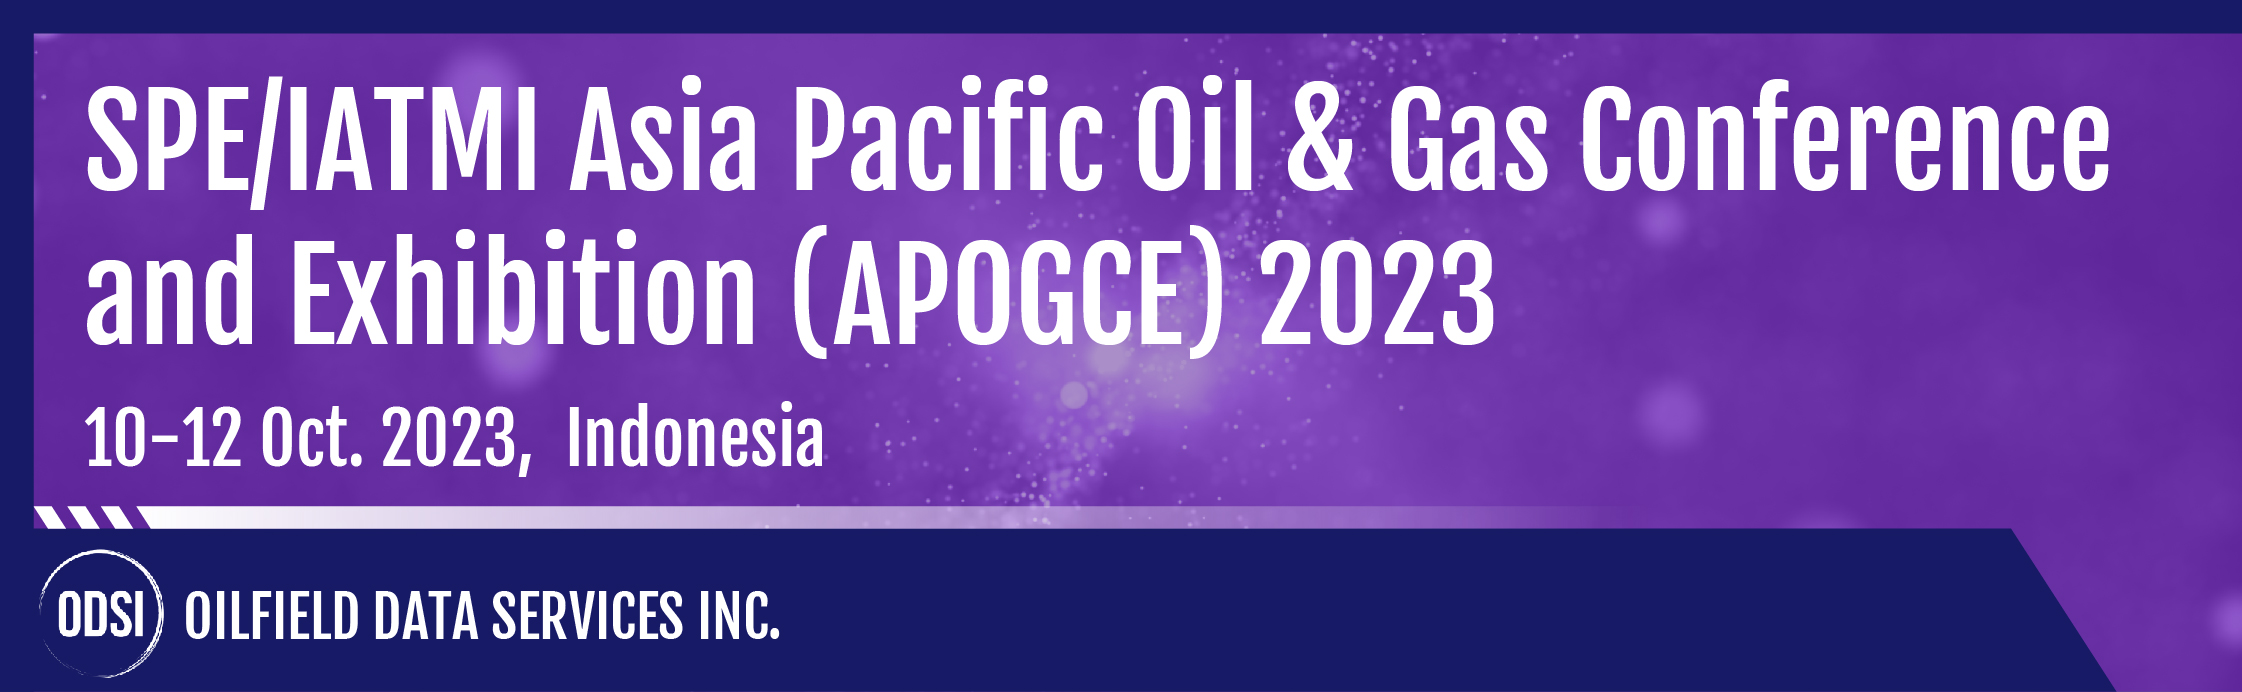 SPE/IATMI Asia Pacific Oil & Gas Conference and Exhibition (APOGCE) 2023